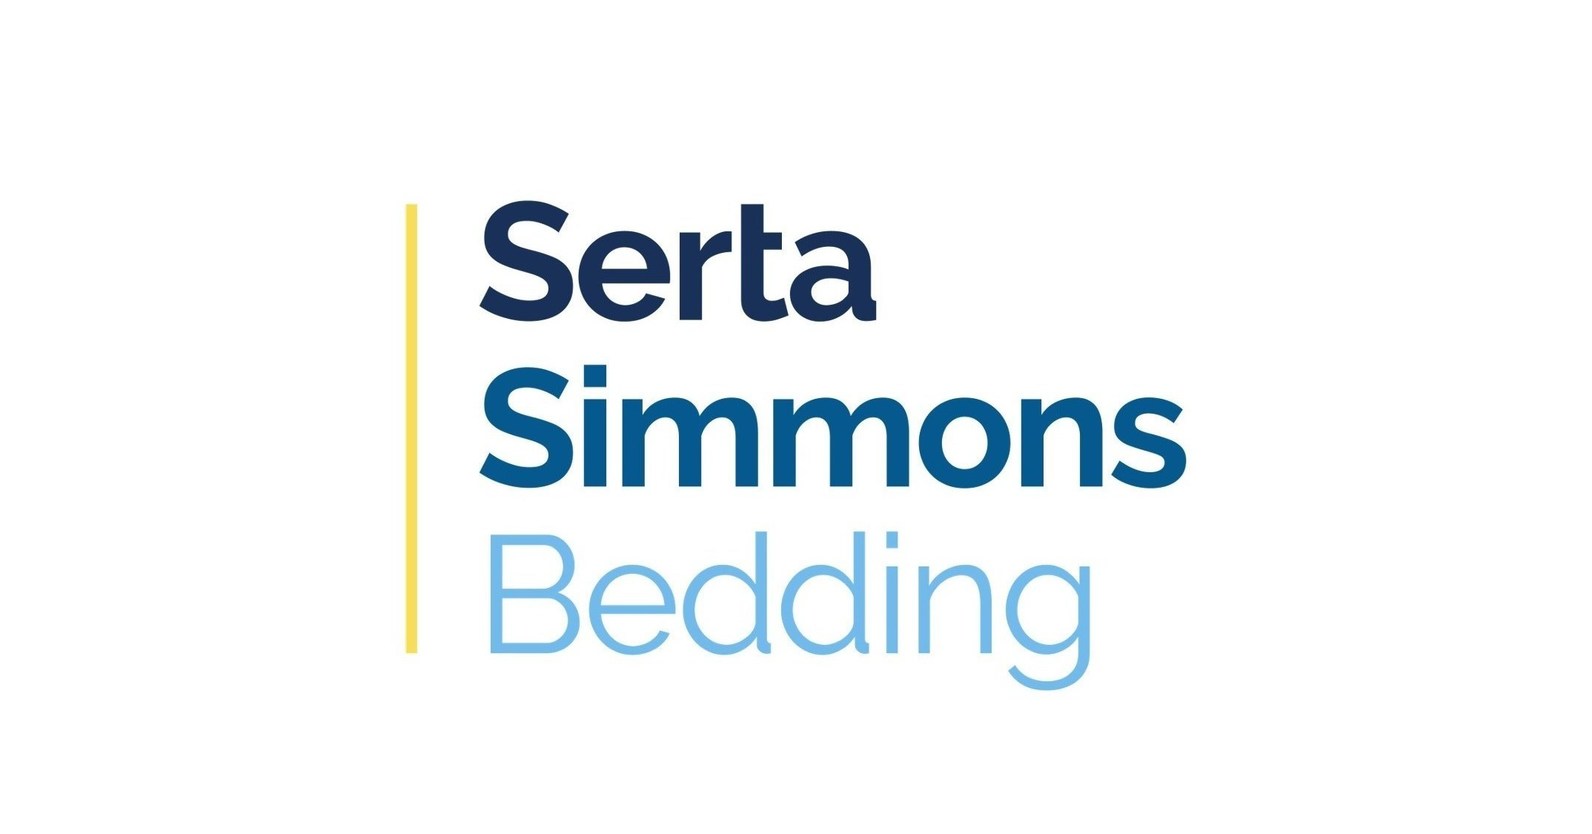 Serta Simmons Bedding Elevates Two Key Leaders ...